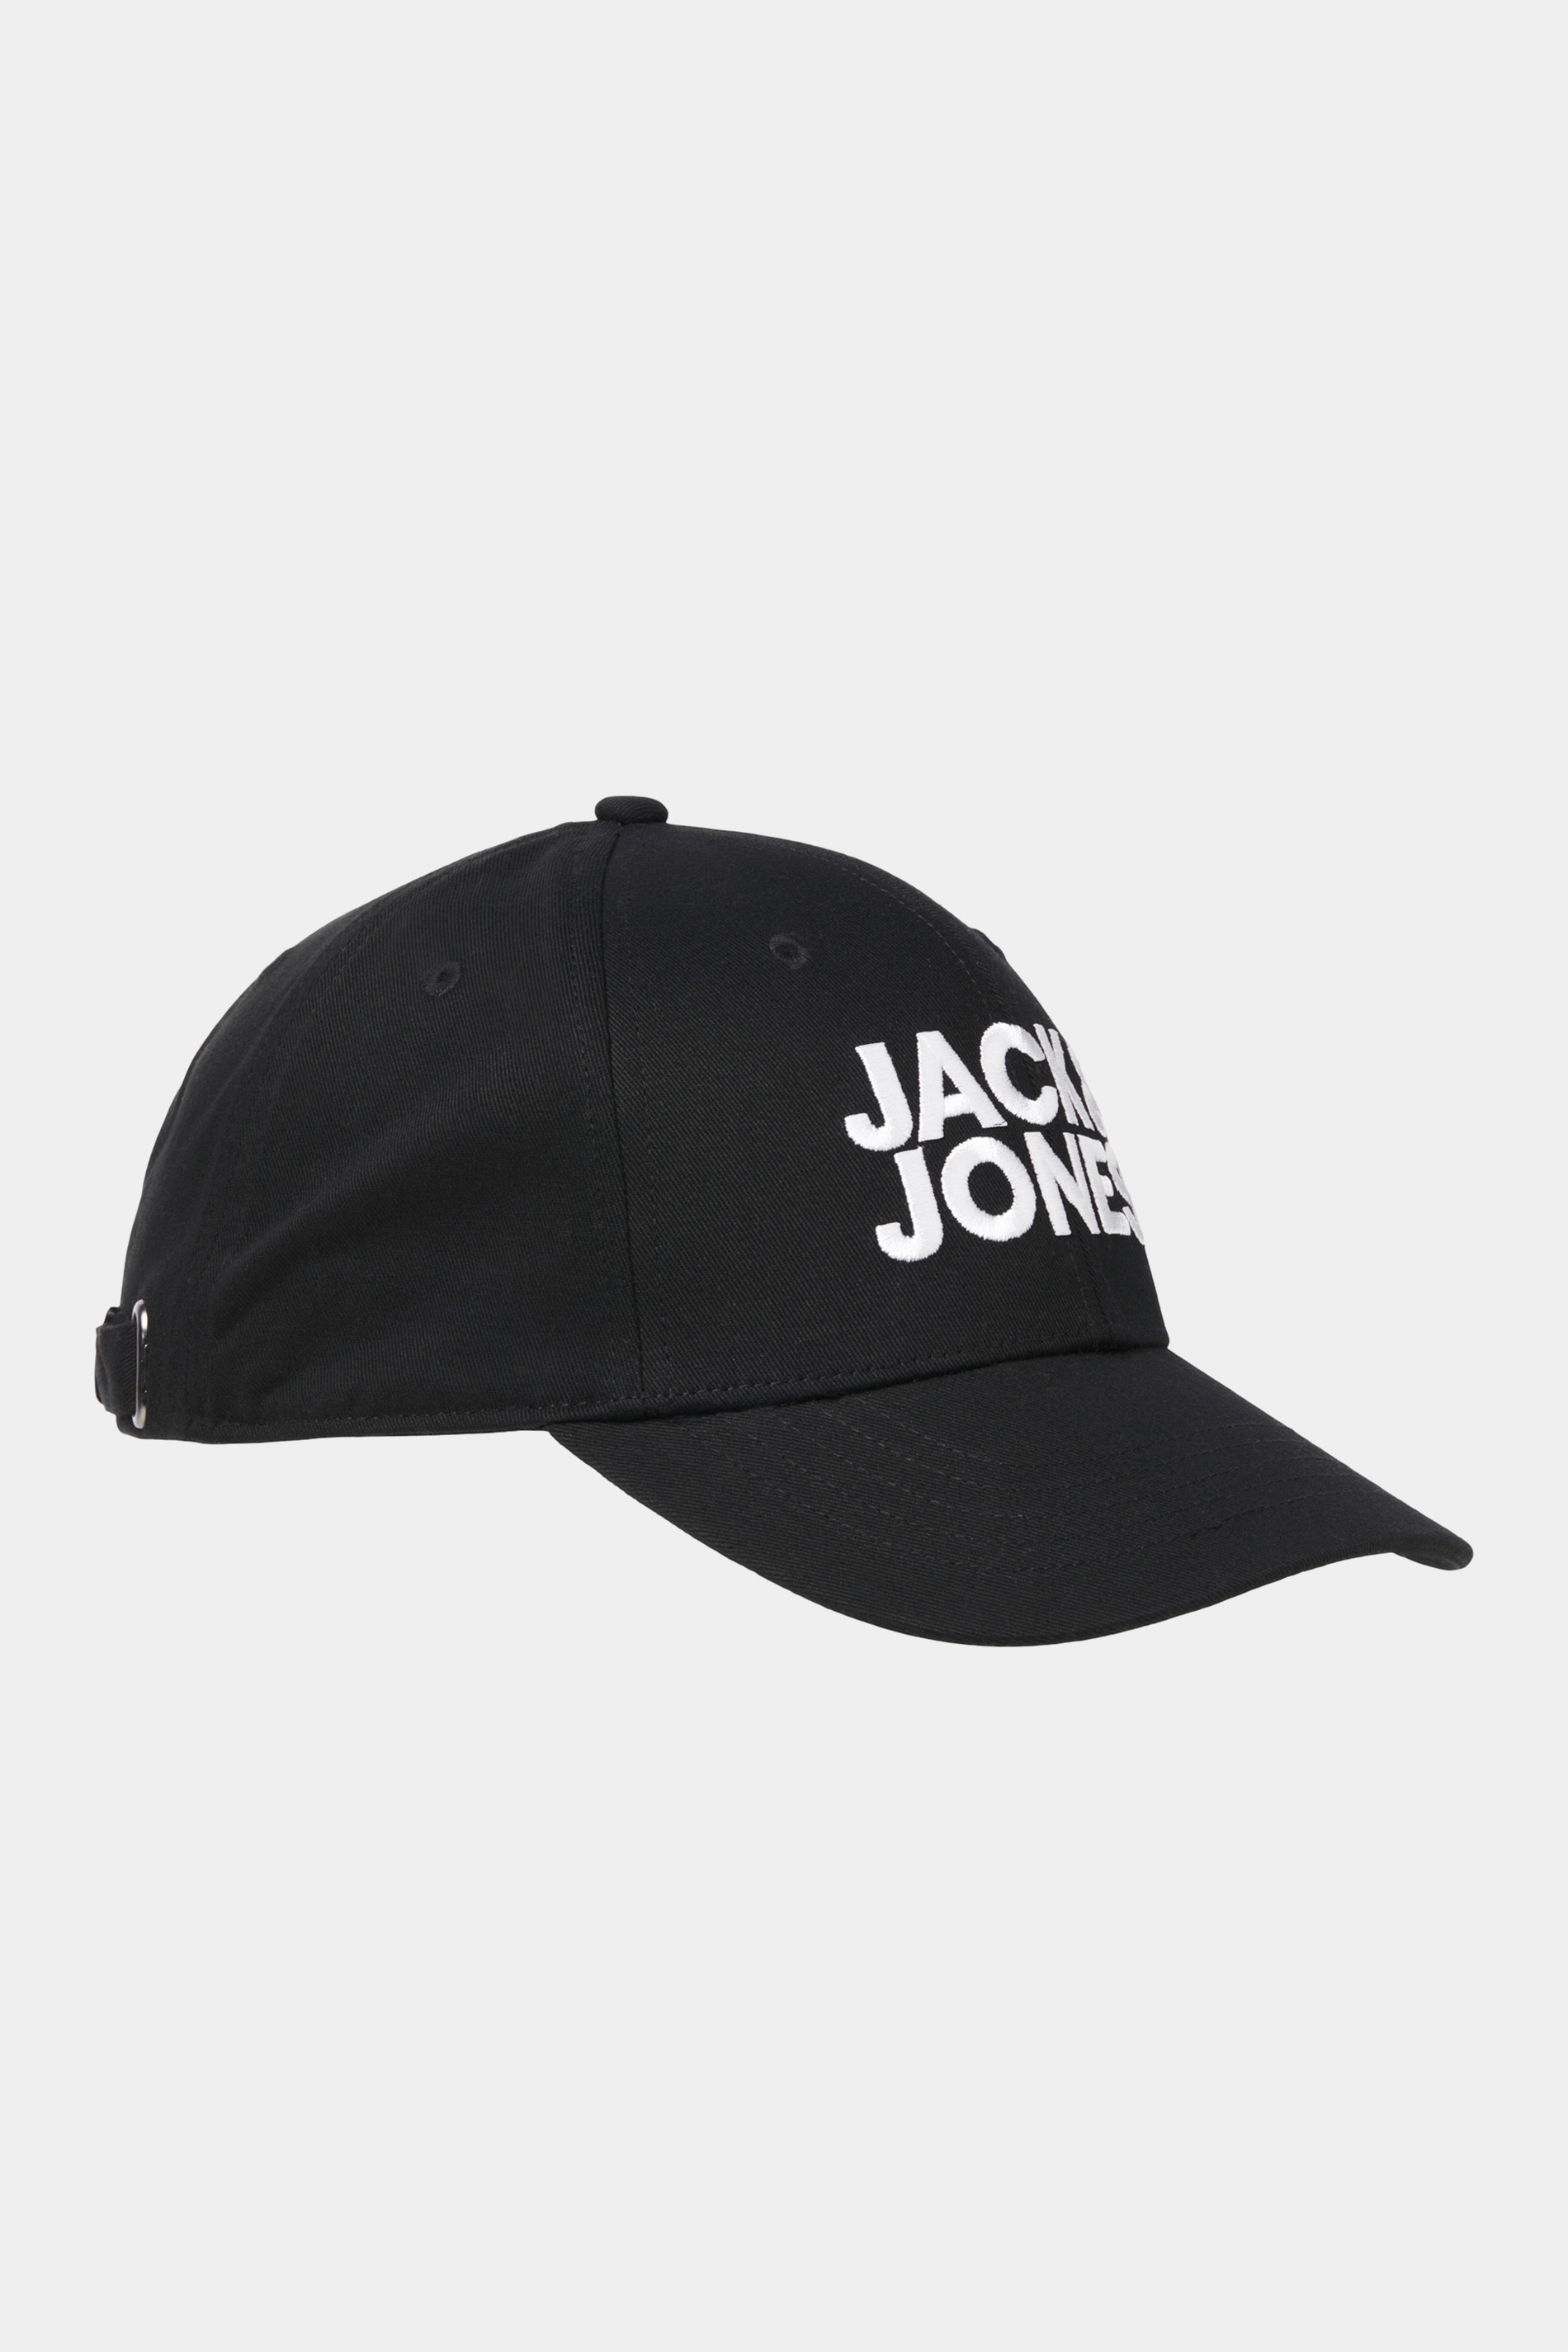 JACK & JONES Black & White Baseball Cap | BadRhino 3